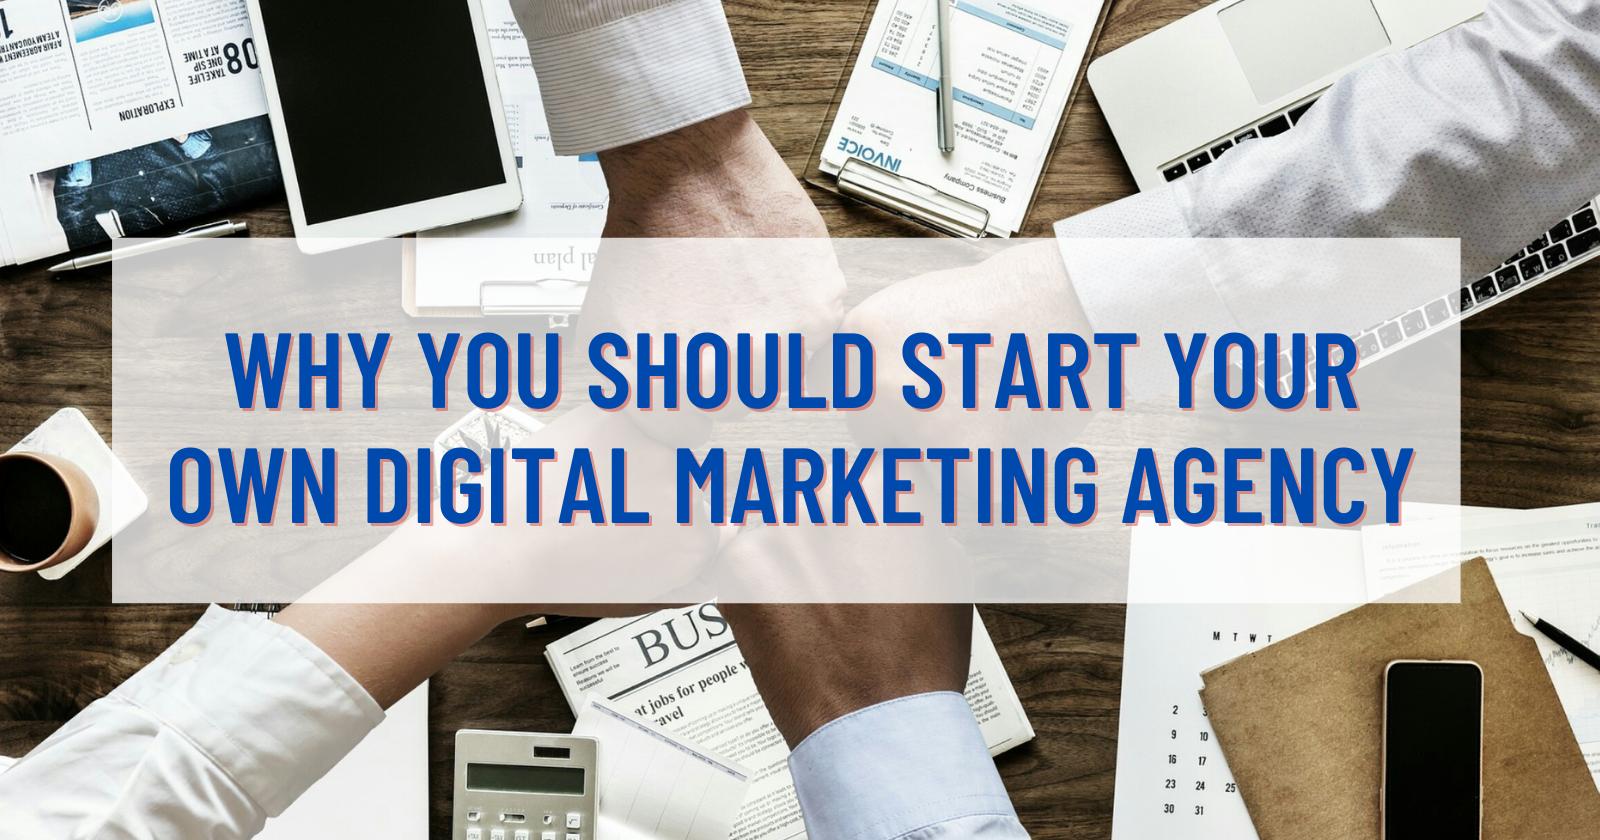 Digital Marketing: Do it Right